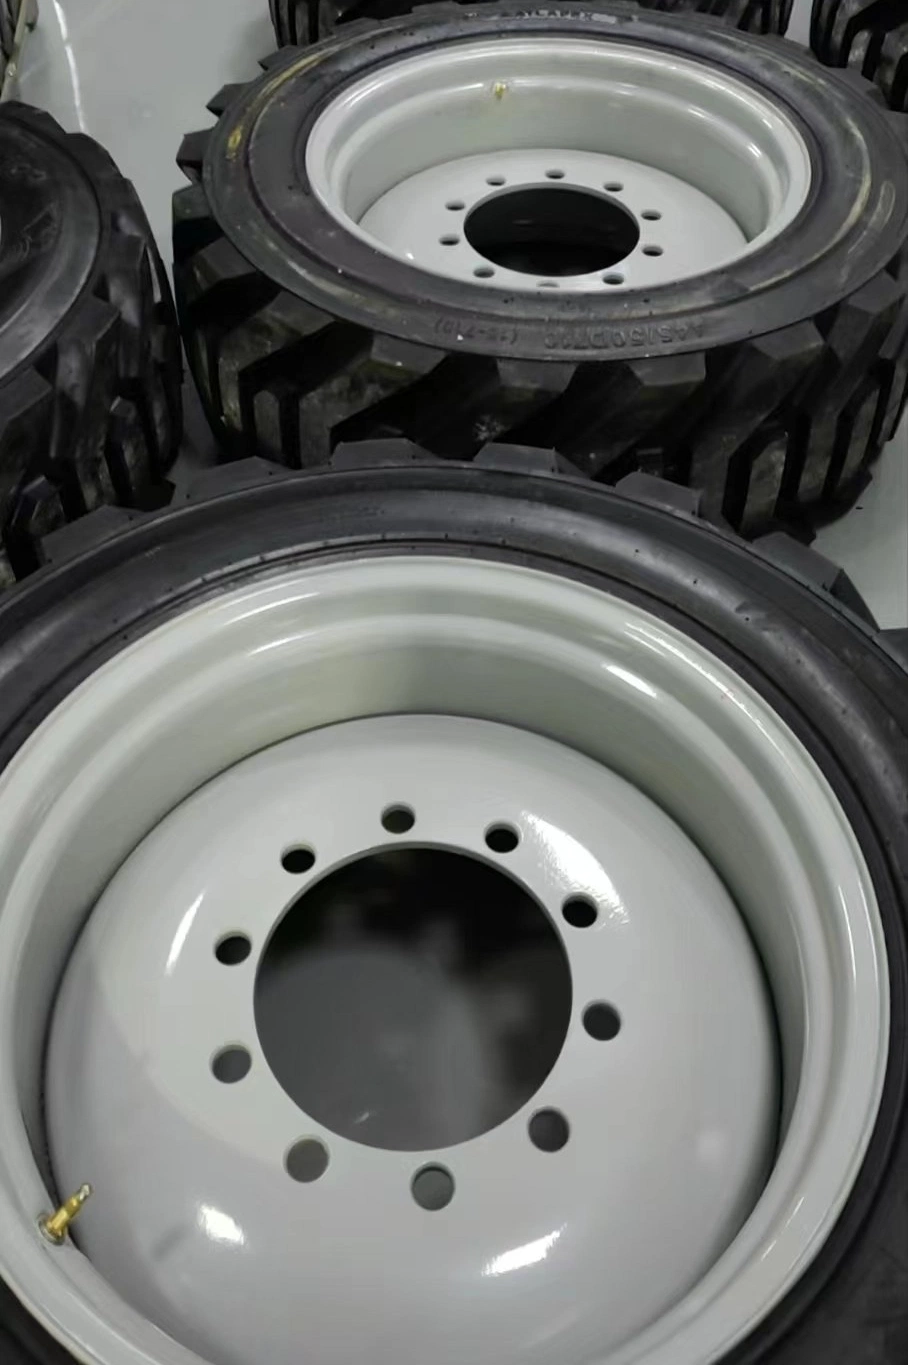 Industrial Tires OTR Bias Tire Sks 10-16.5 12-16.5 14-17.5 Skid Steer Tire for Backhoe